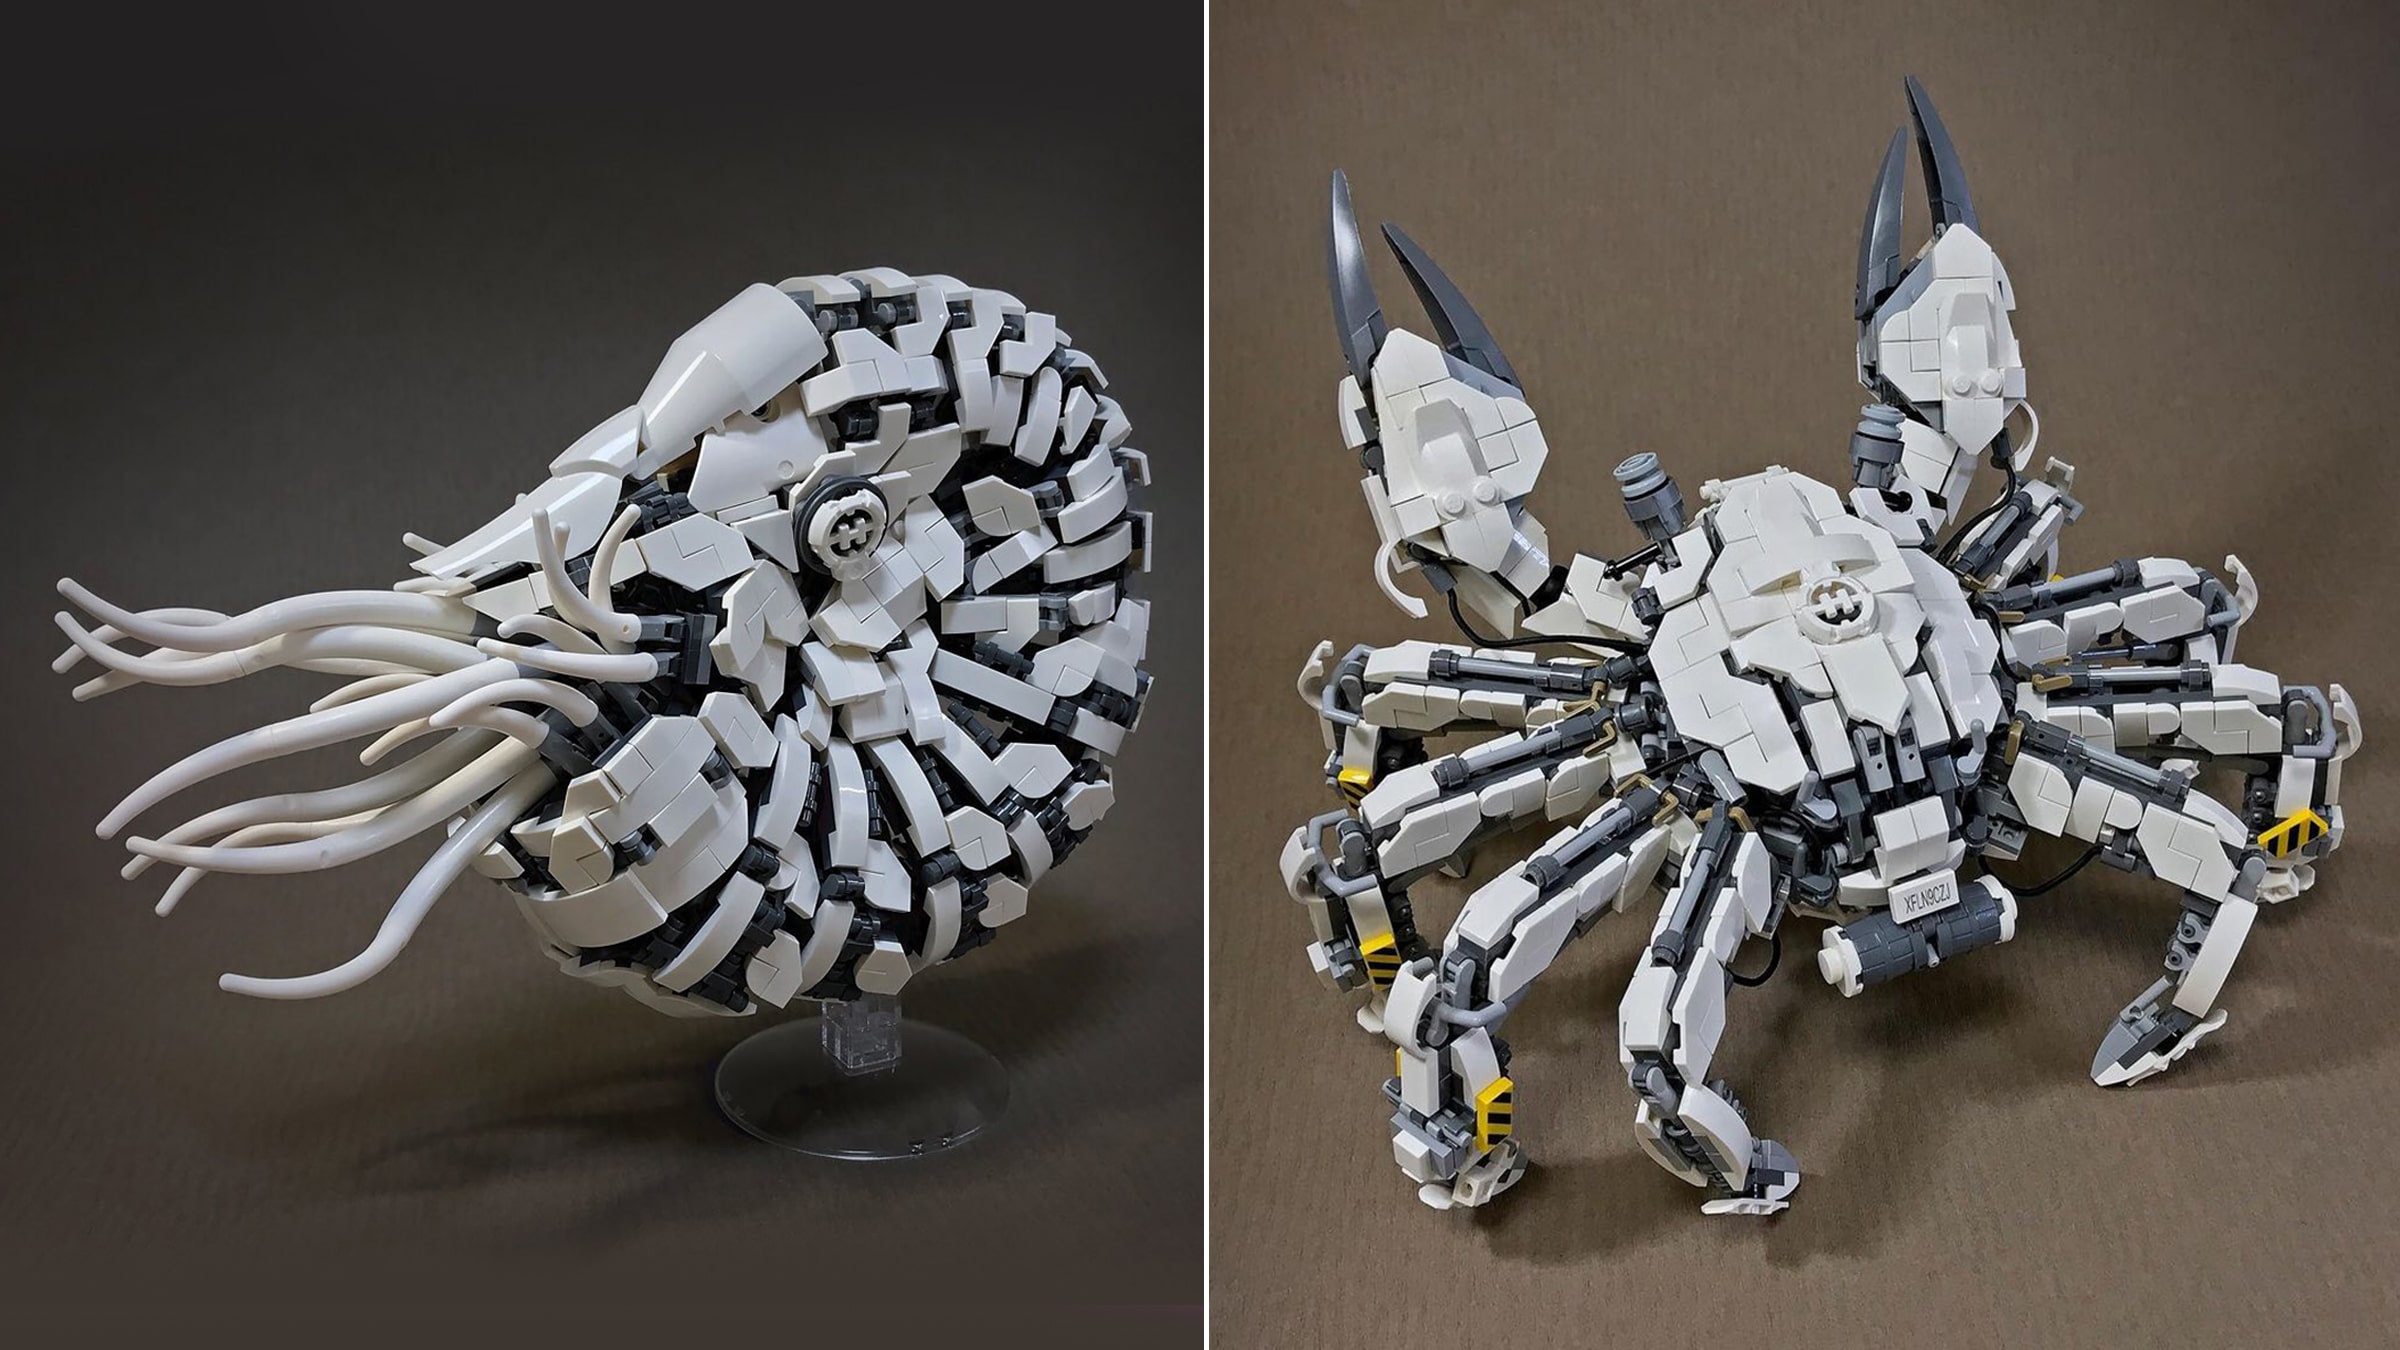 Les incroyables animaux en LEGO de l'artiste japonais Mitsuru Nikaido